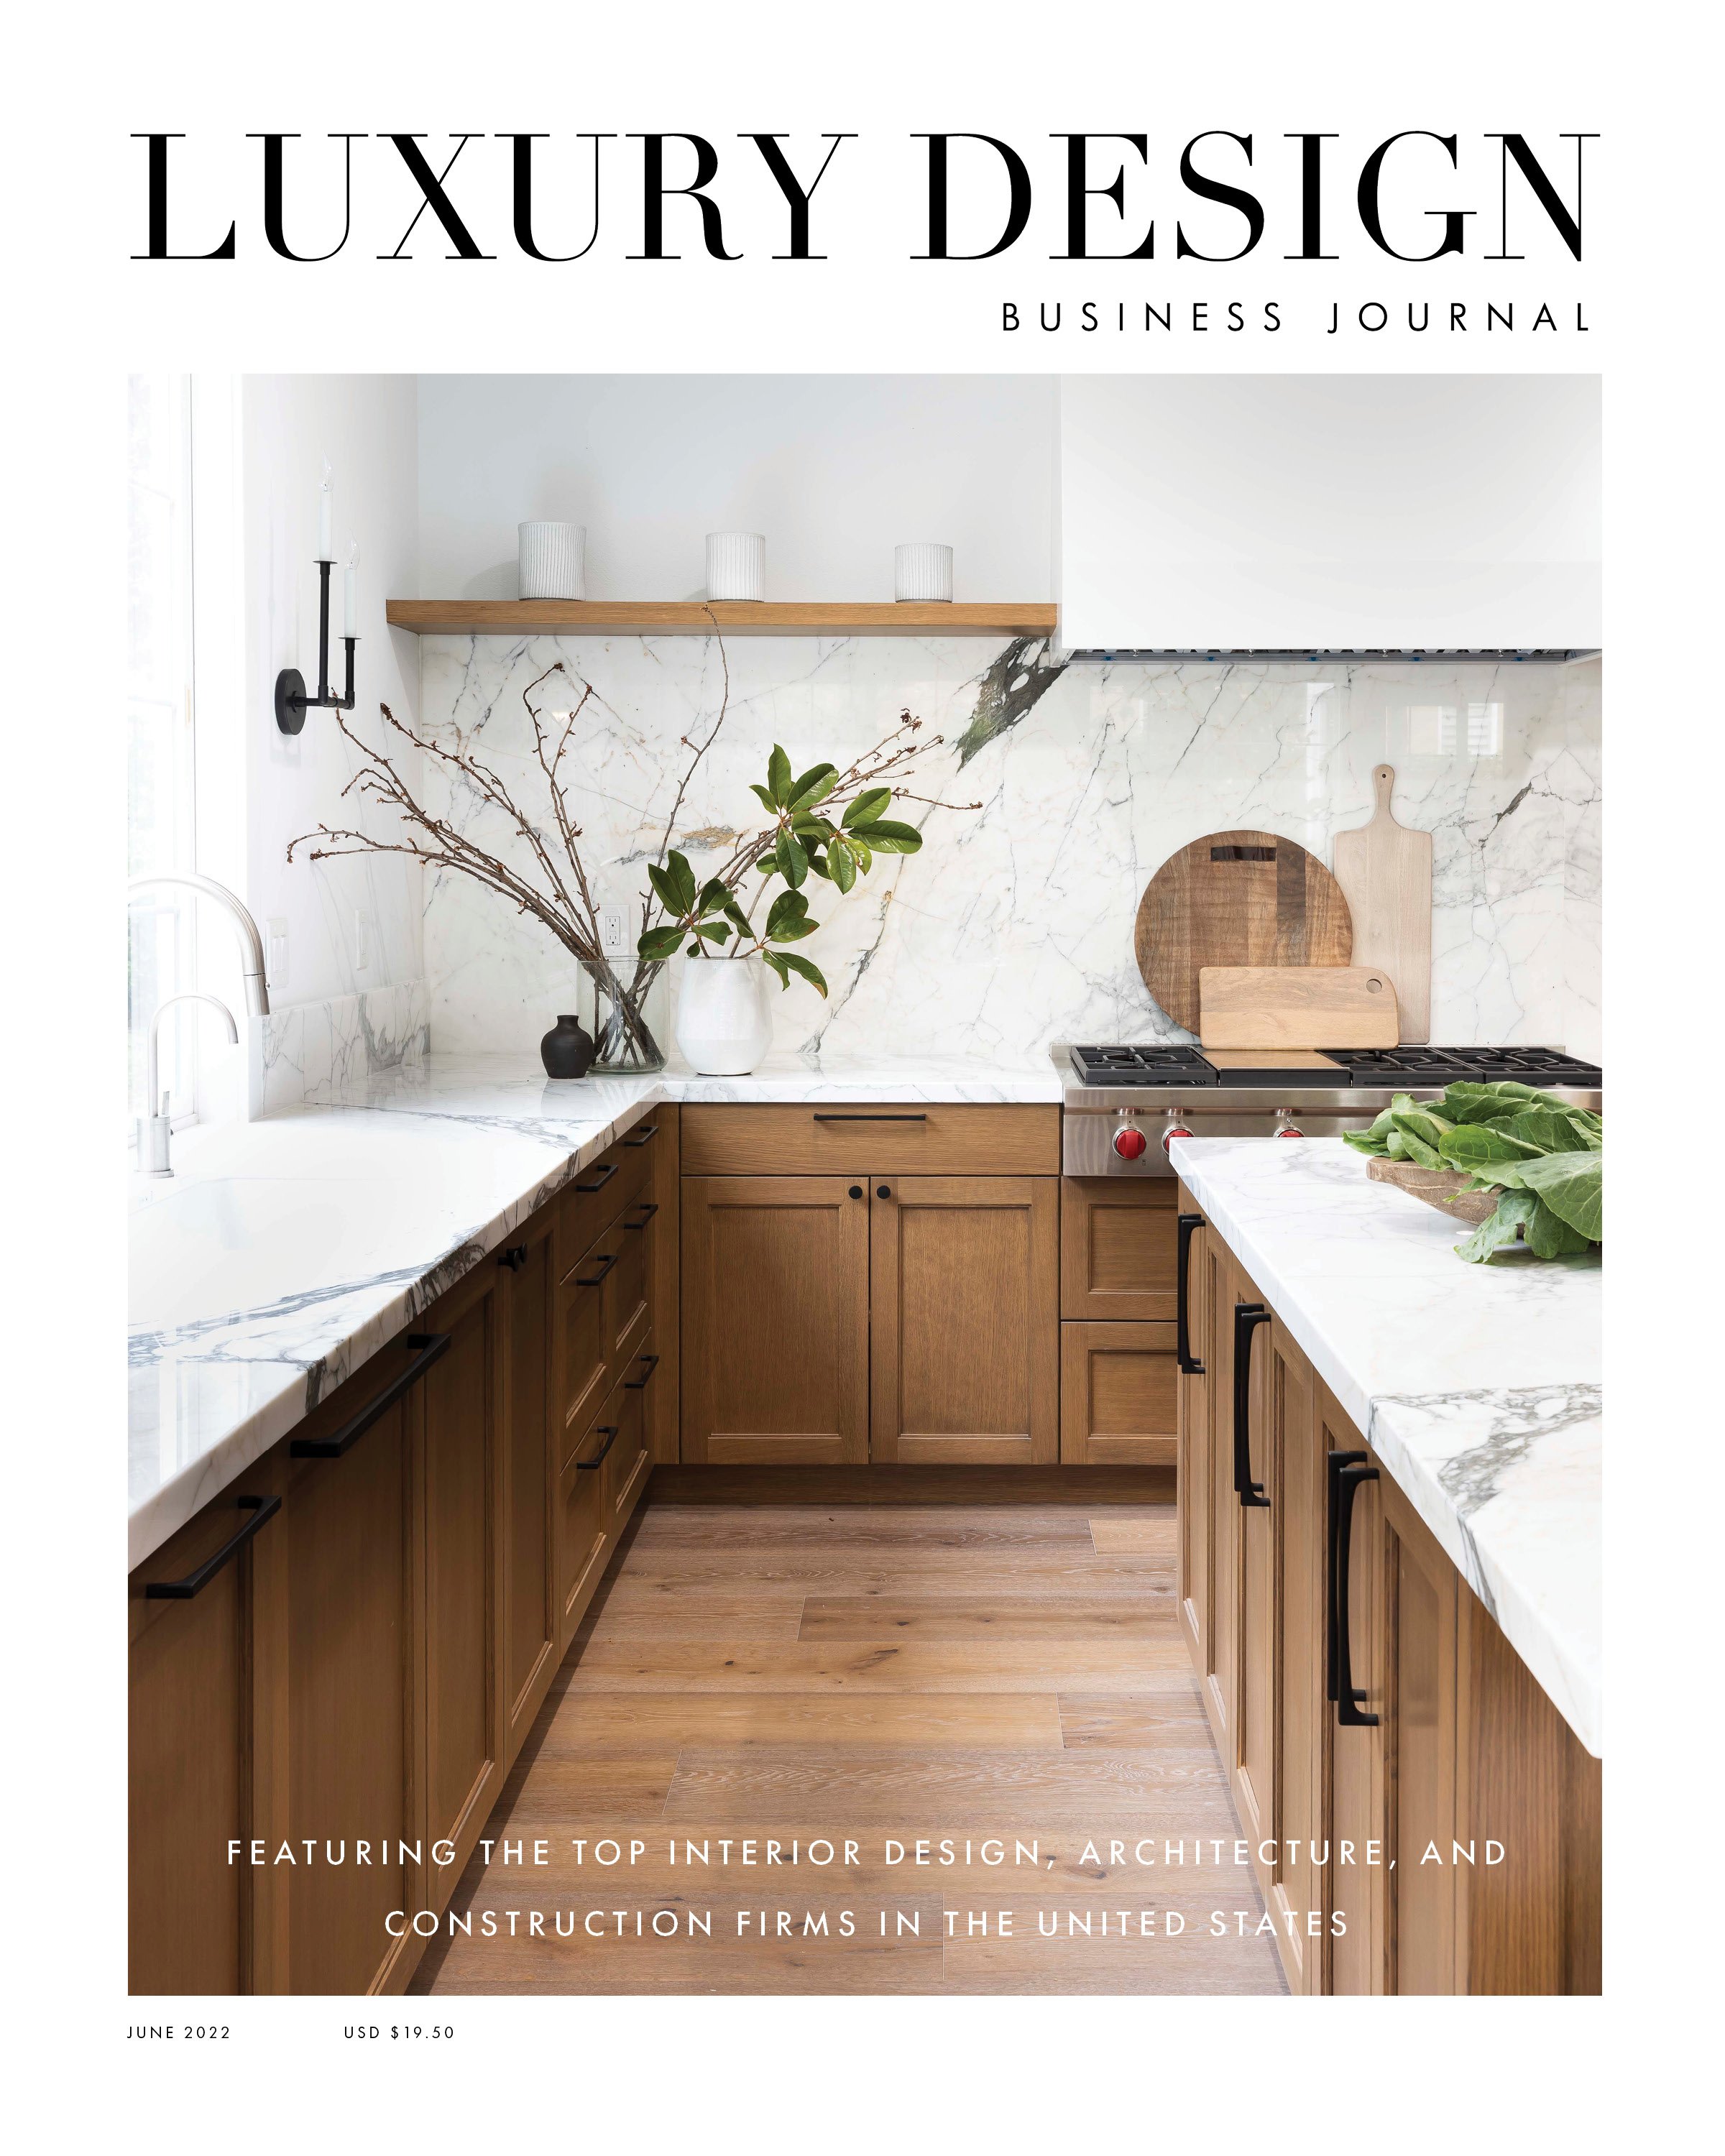 Luxury Design Business #Journal, June 2022